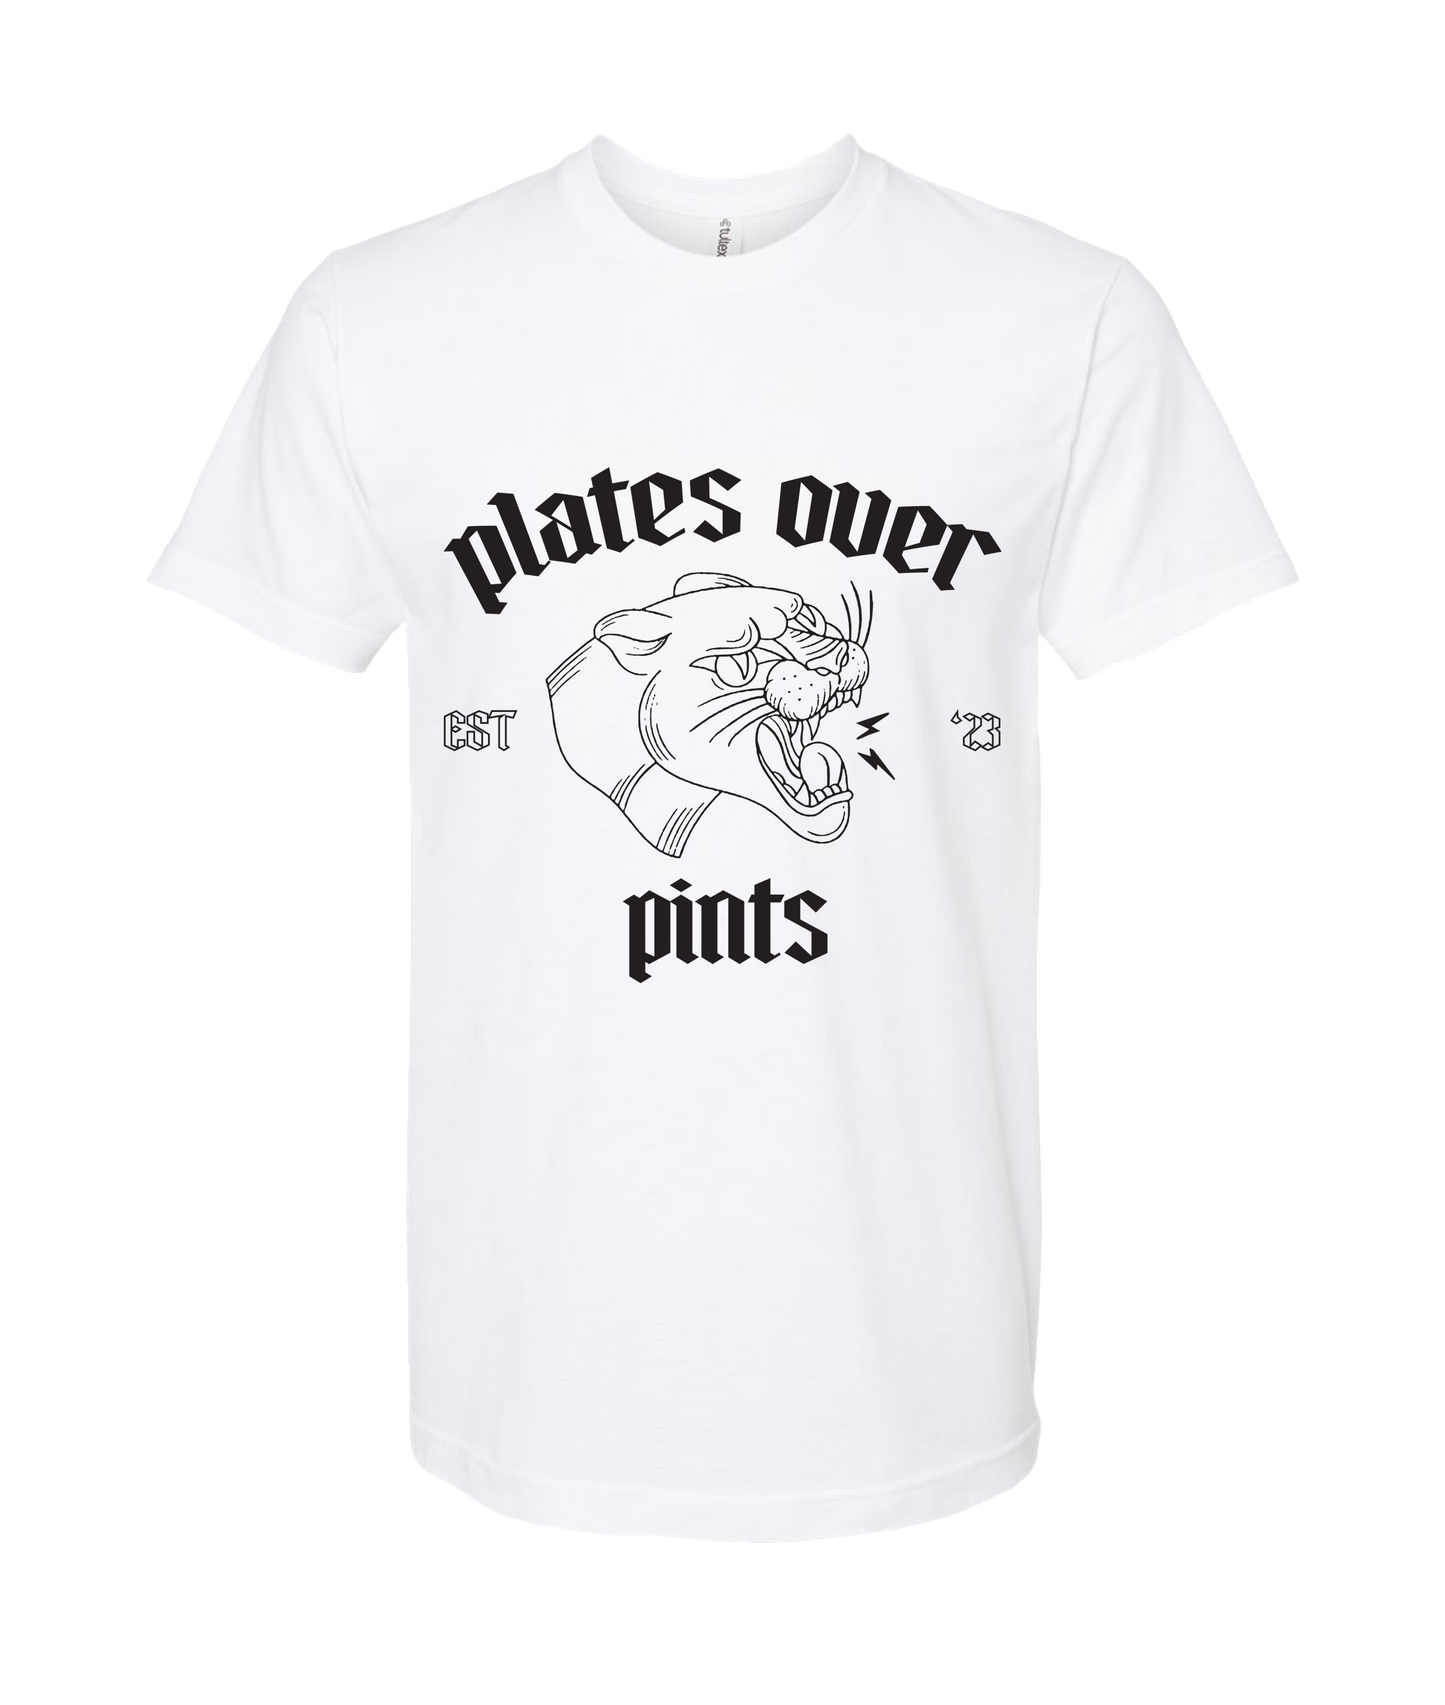 Plates Over Pints - LOGO 1 - White T Shirt